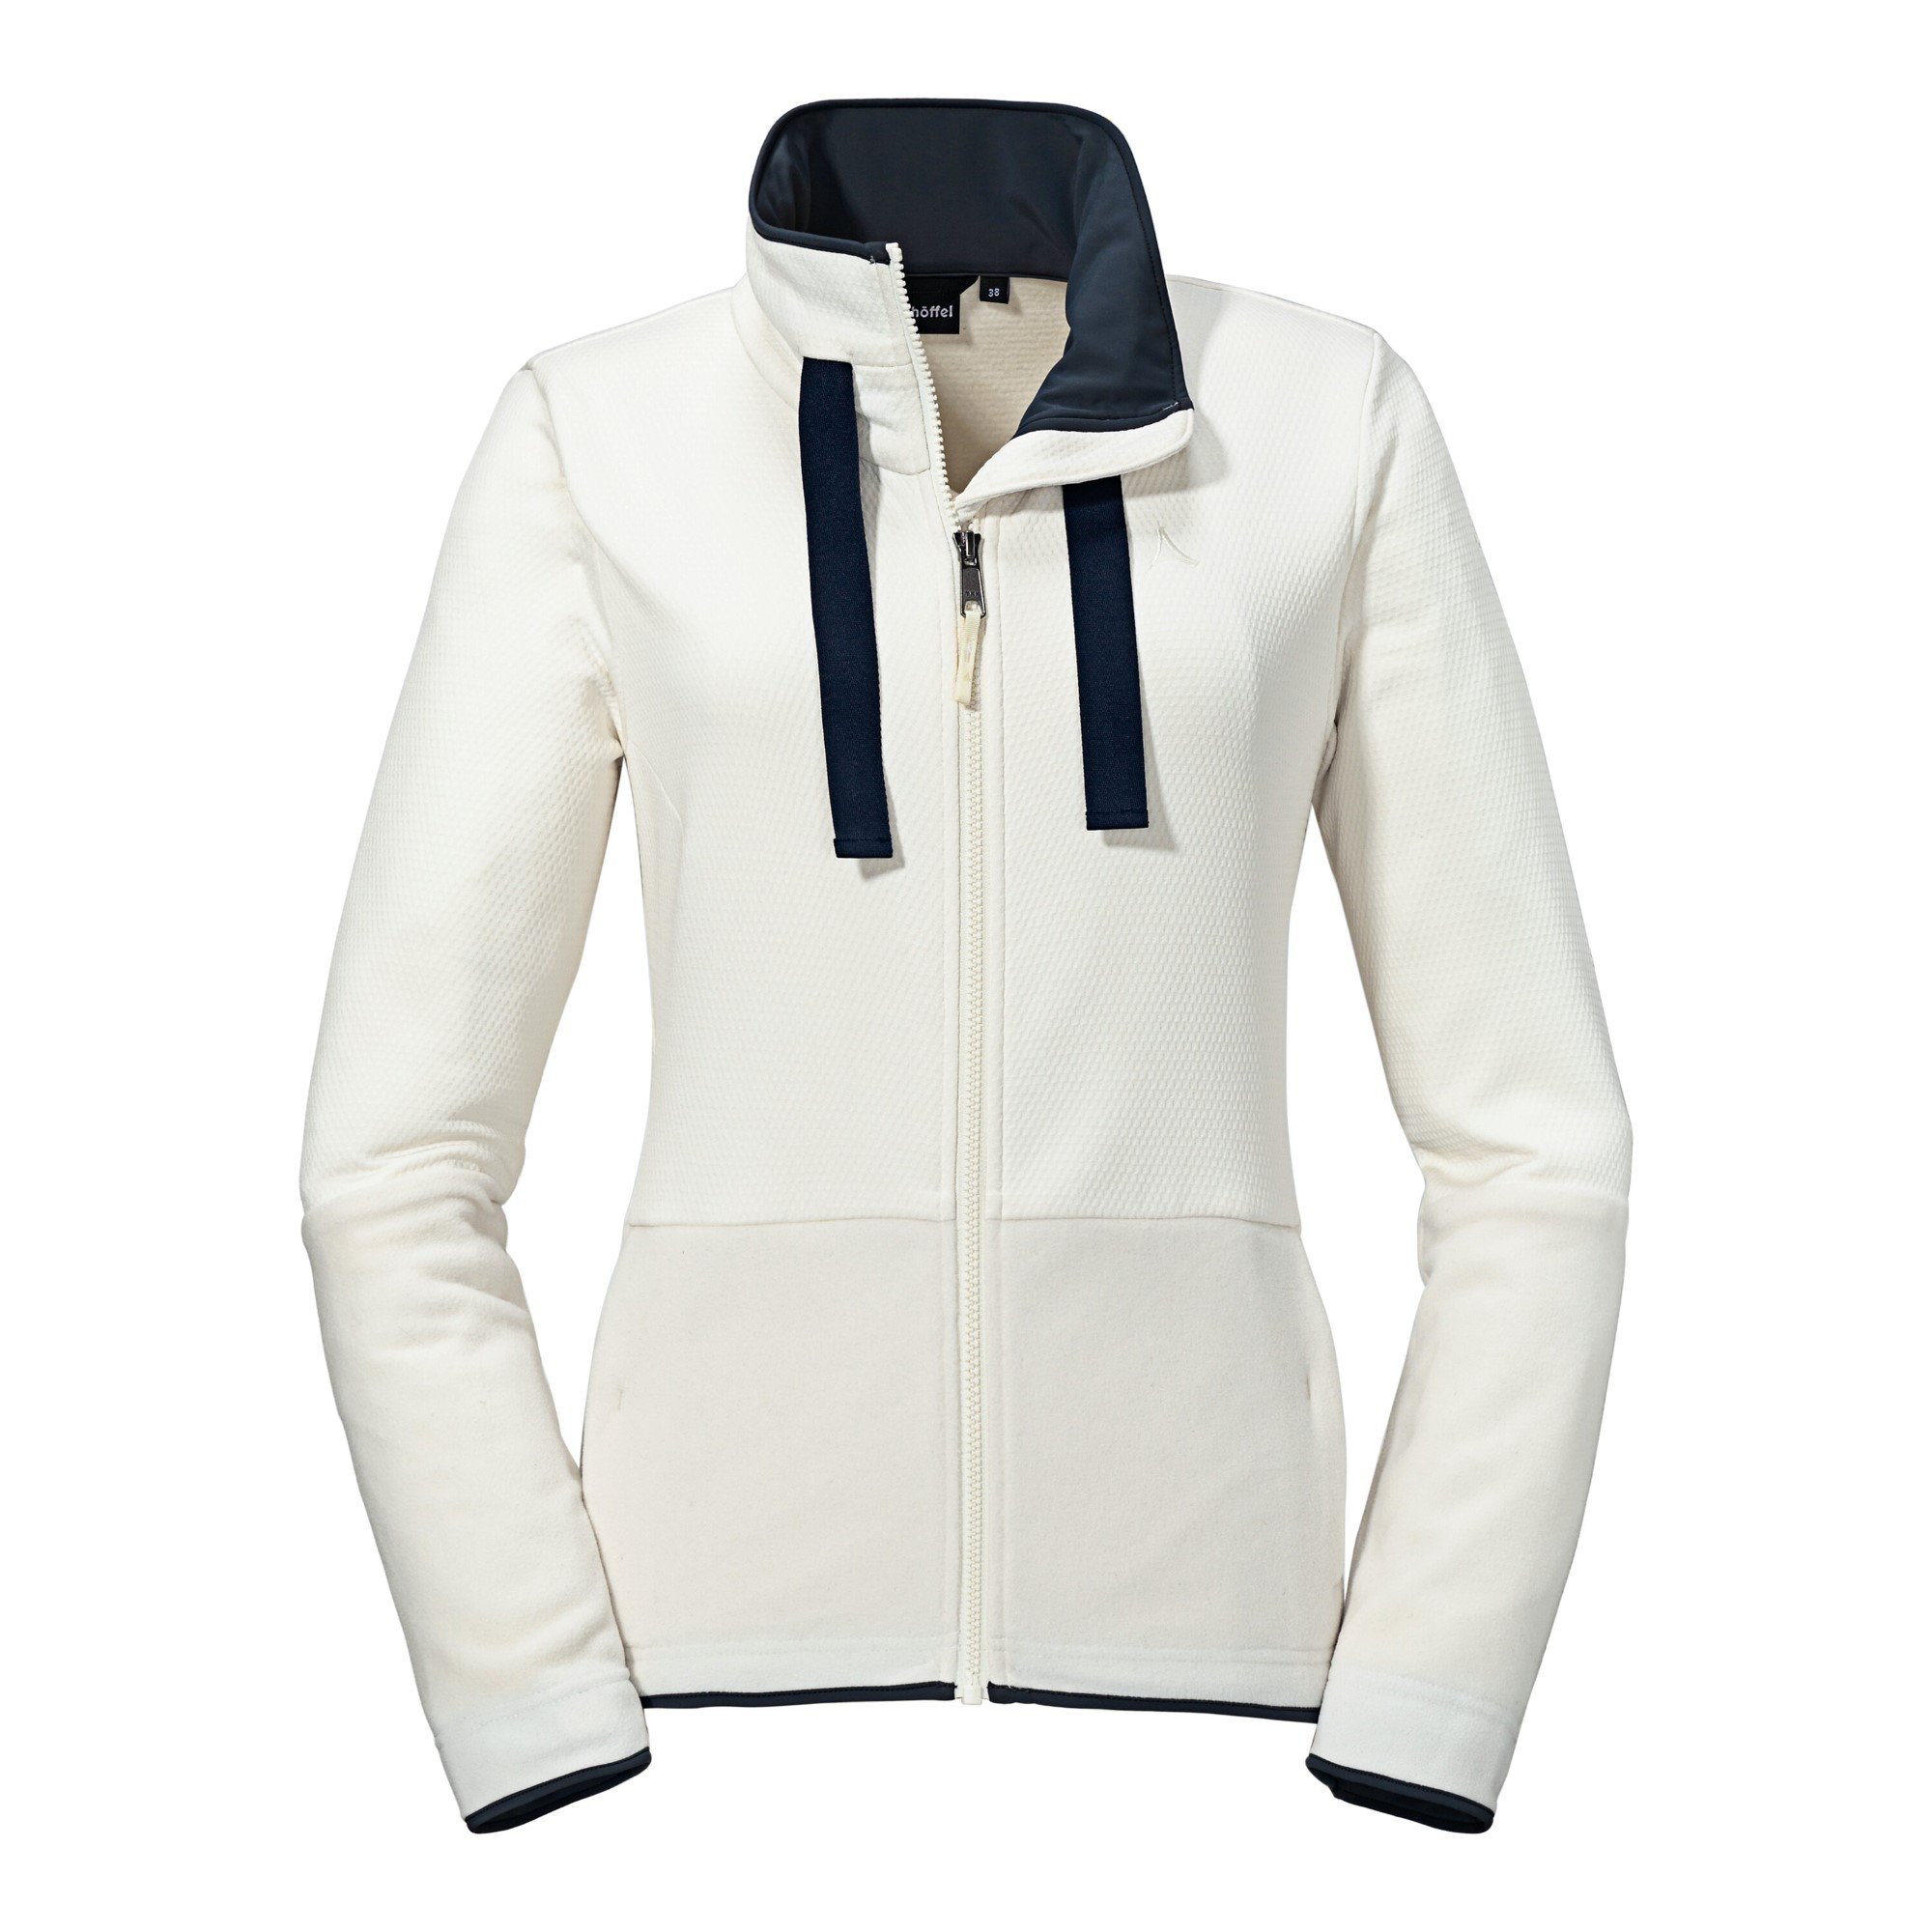 60,00 white L Fleece DAMEN (13319_1140), Jacket Pelham SCHÖFFEL € whisper